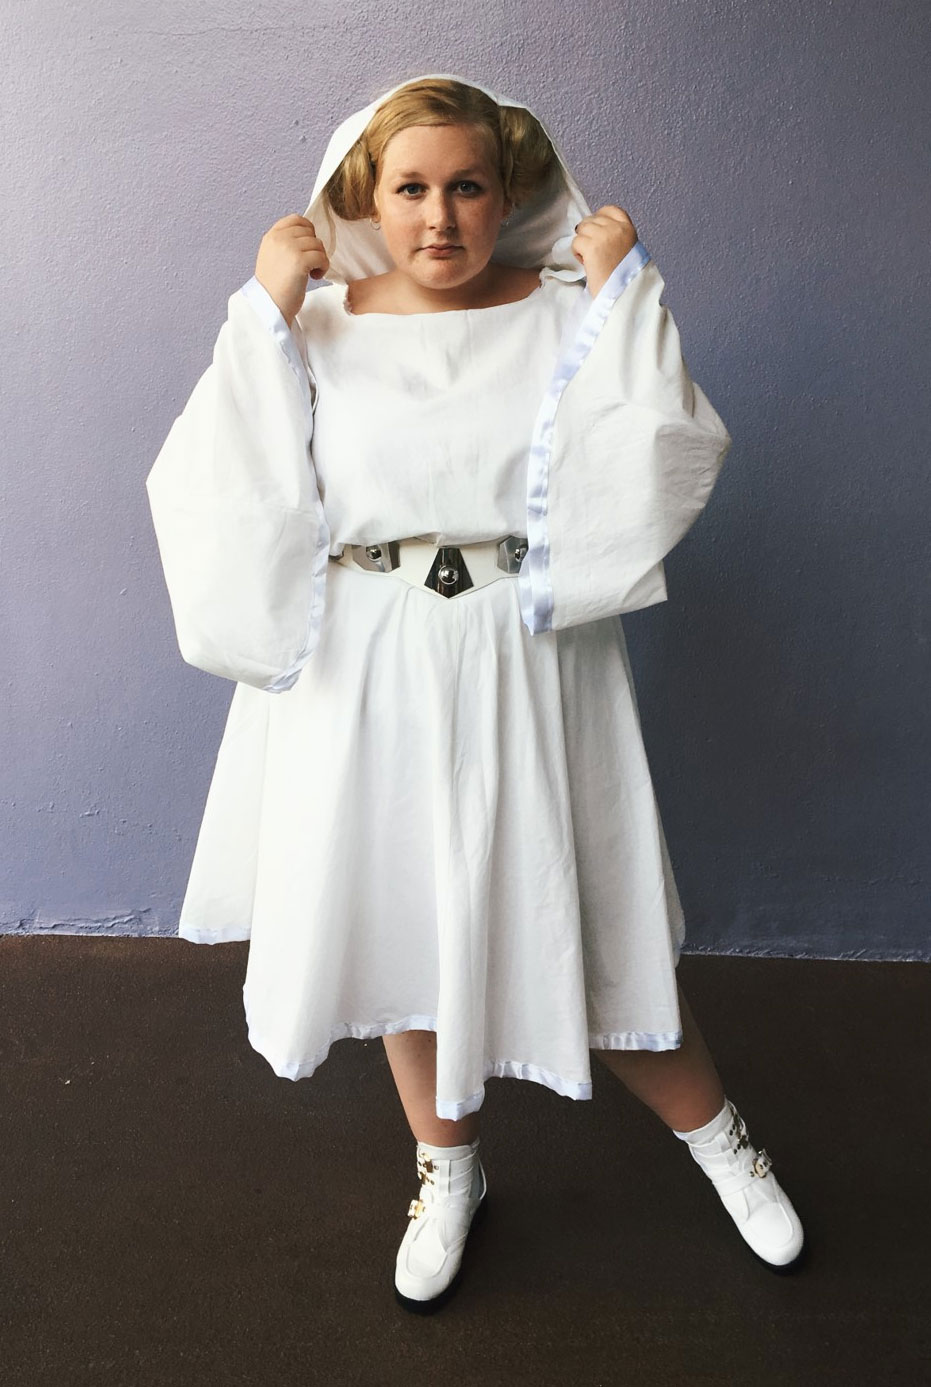 Rebecca Princess Leia Replica Belt Costume Review Star Wars